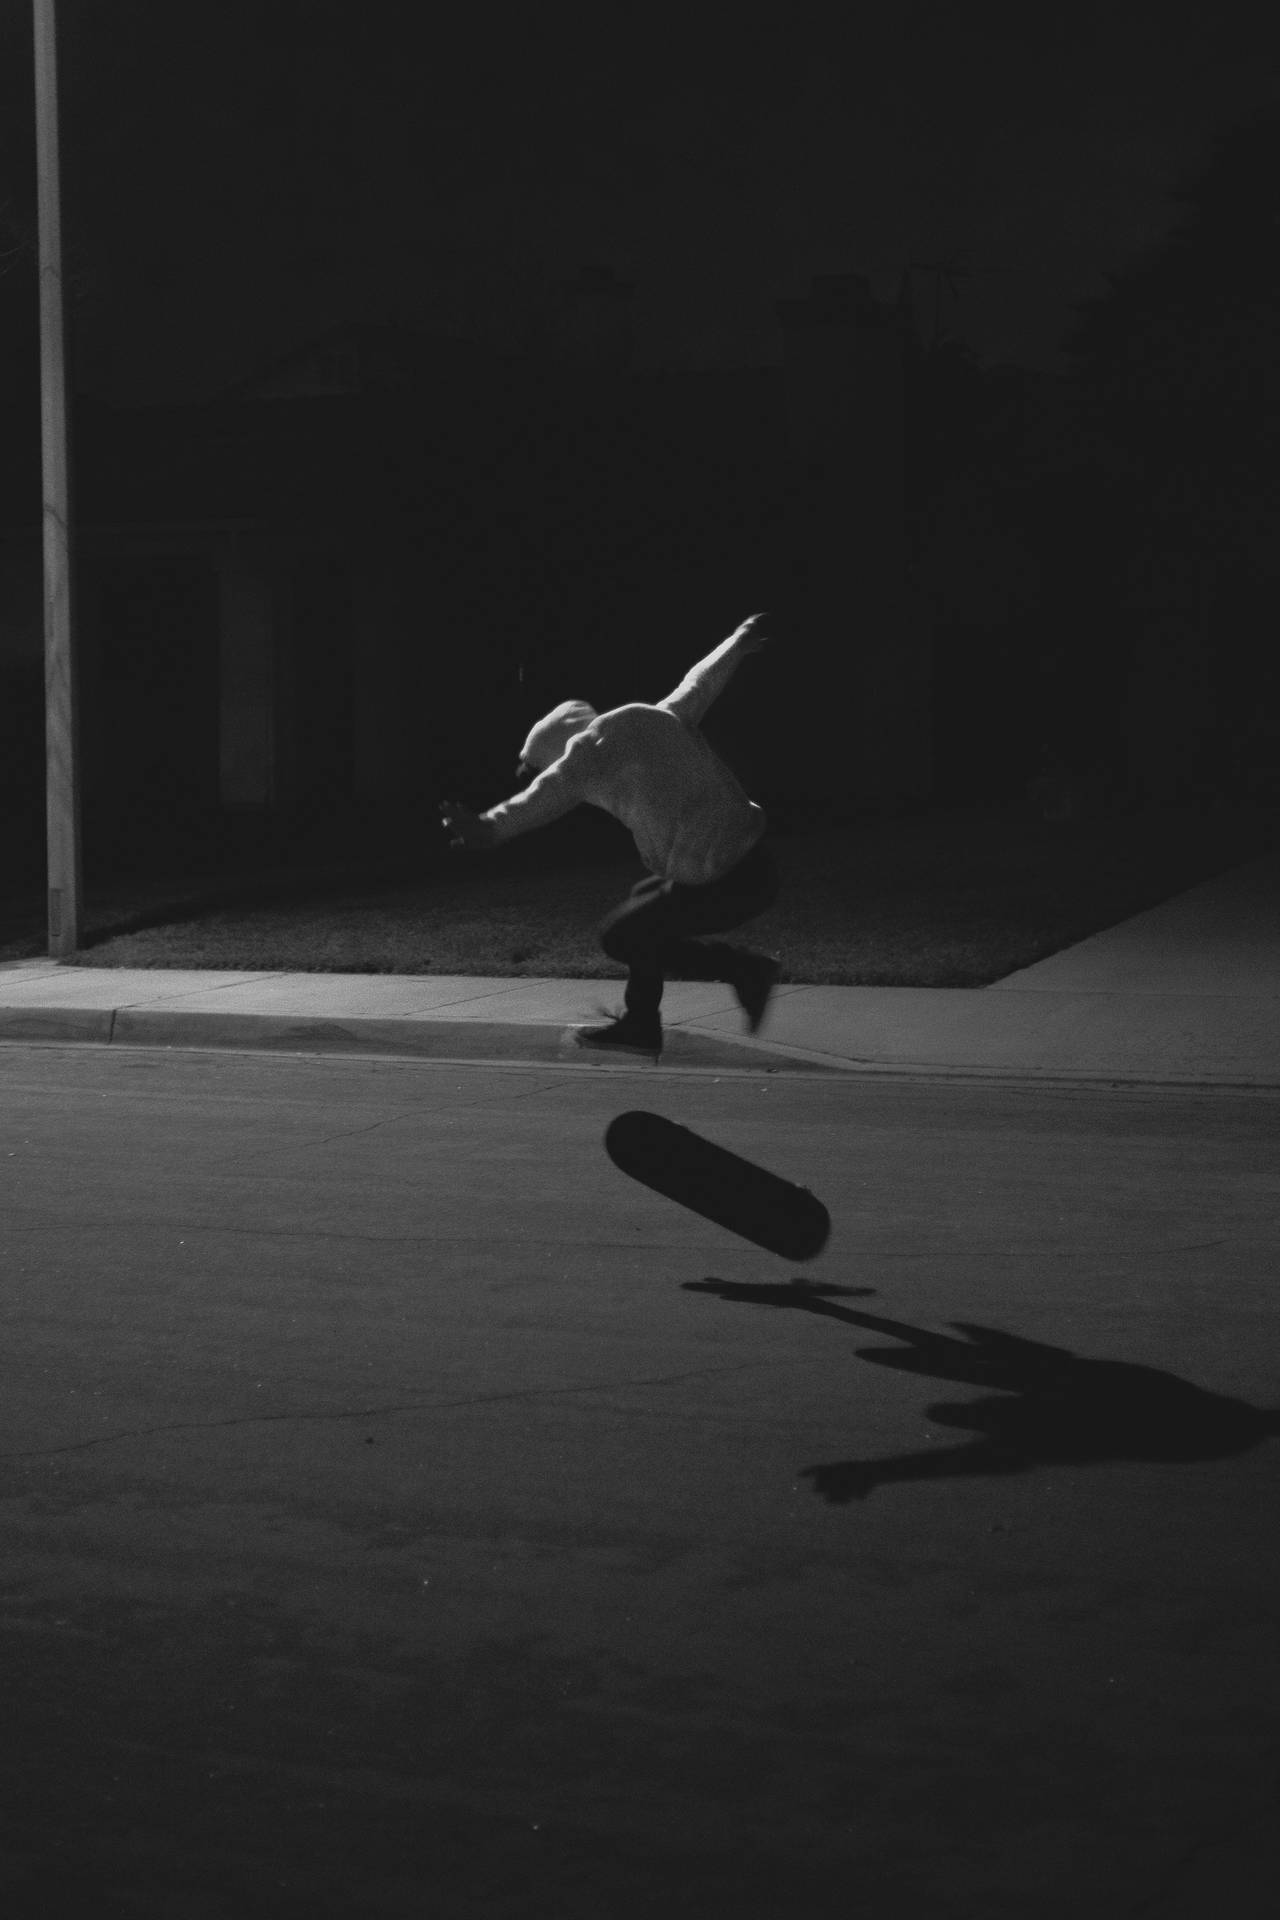 Skater Boy's Nighttime Ride Background